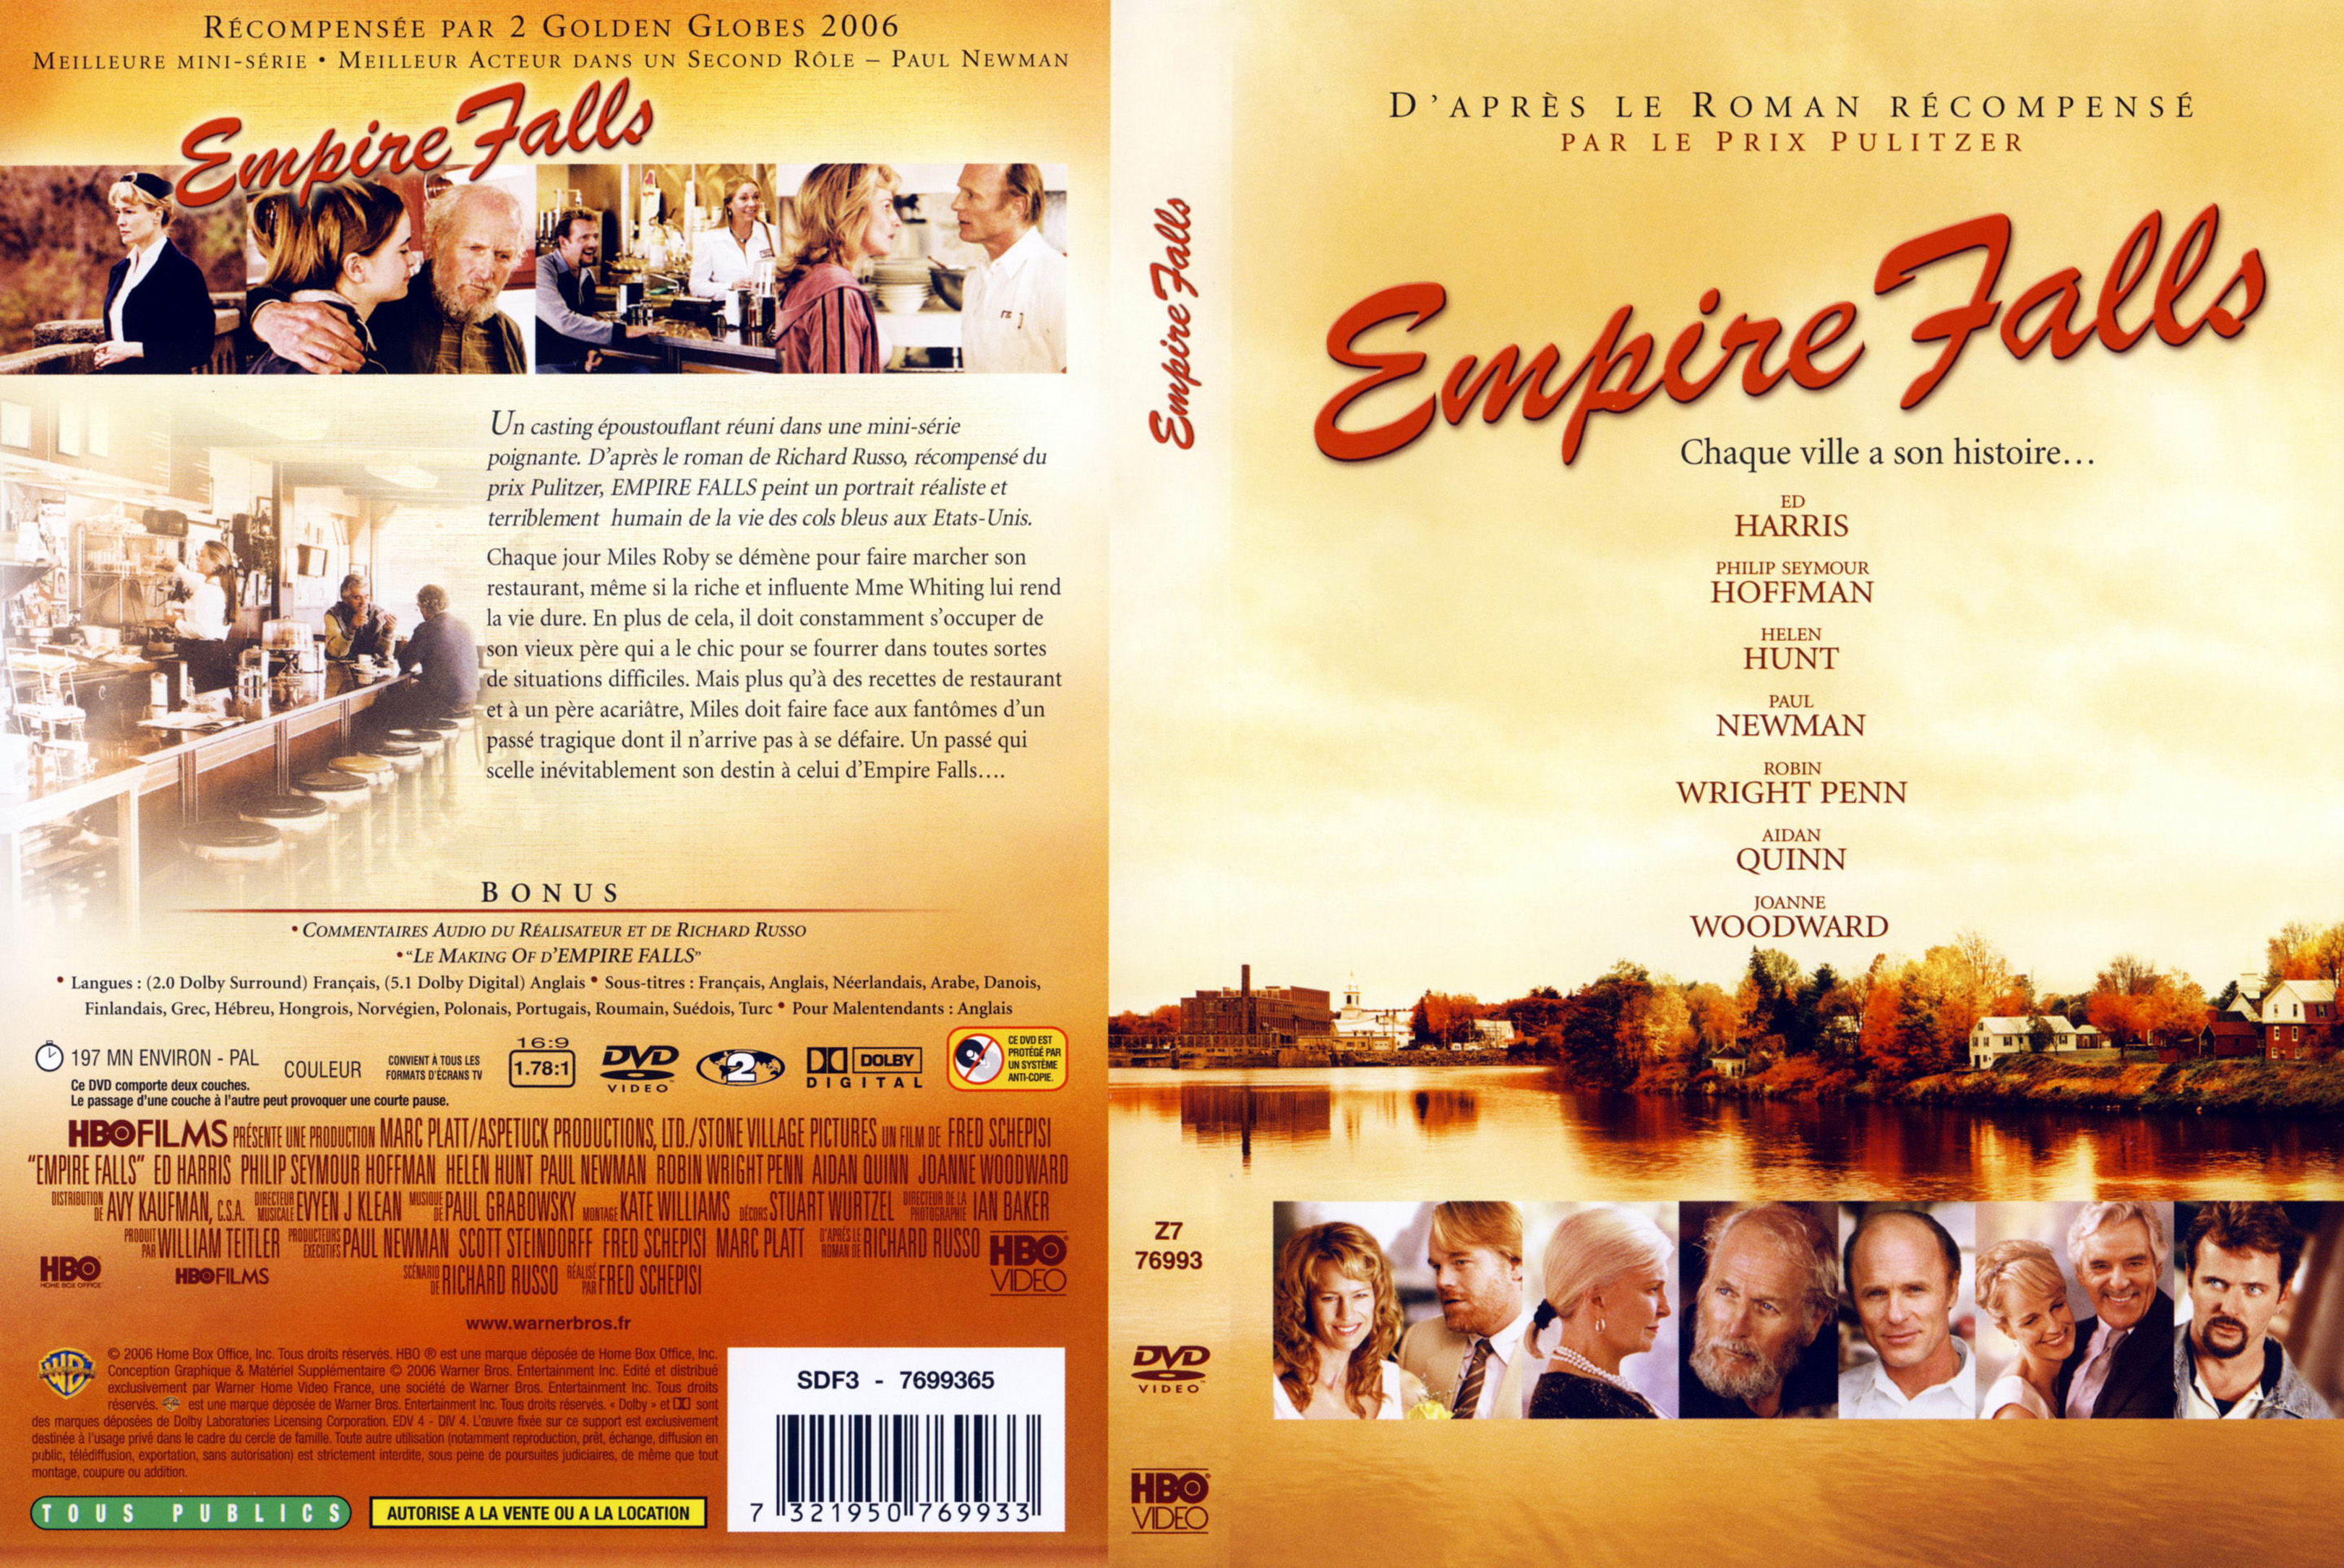 Jaquette DVD Empire falls